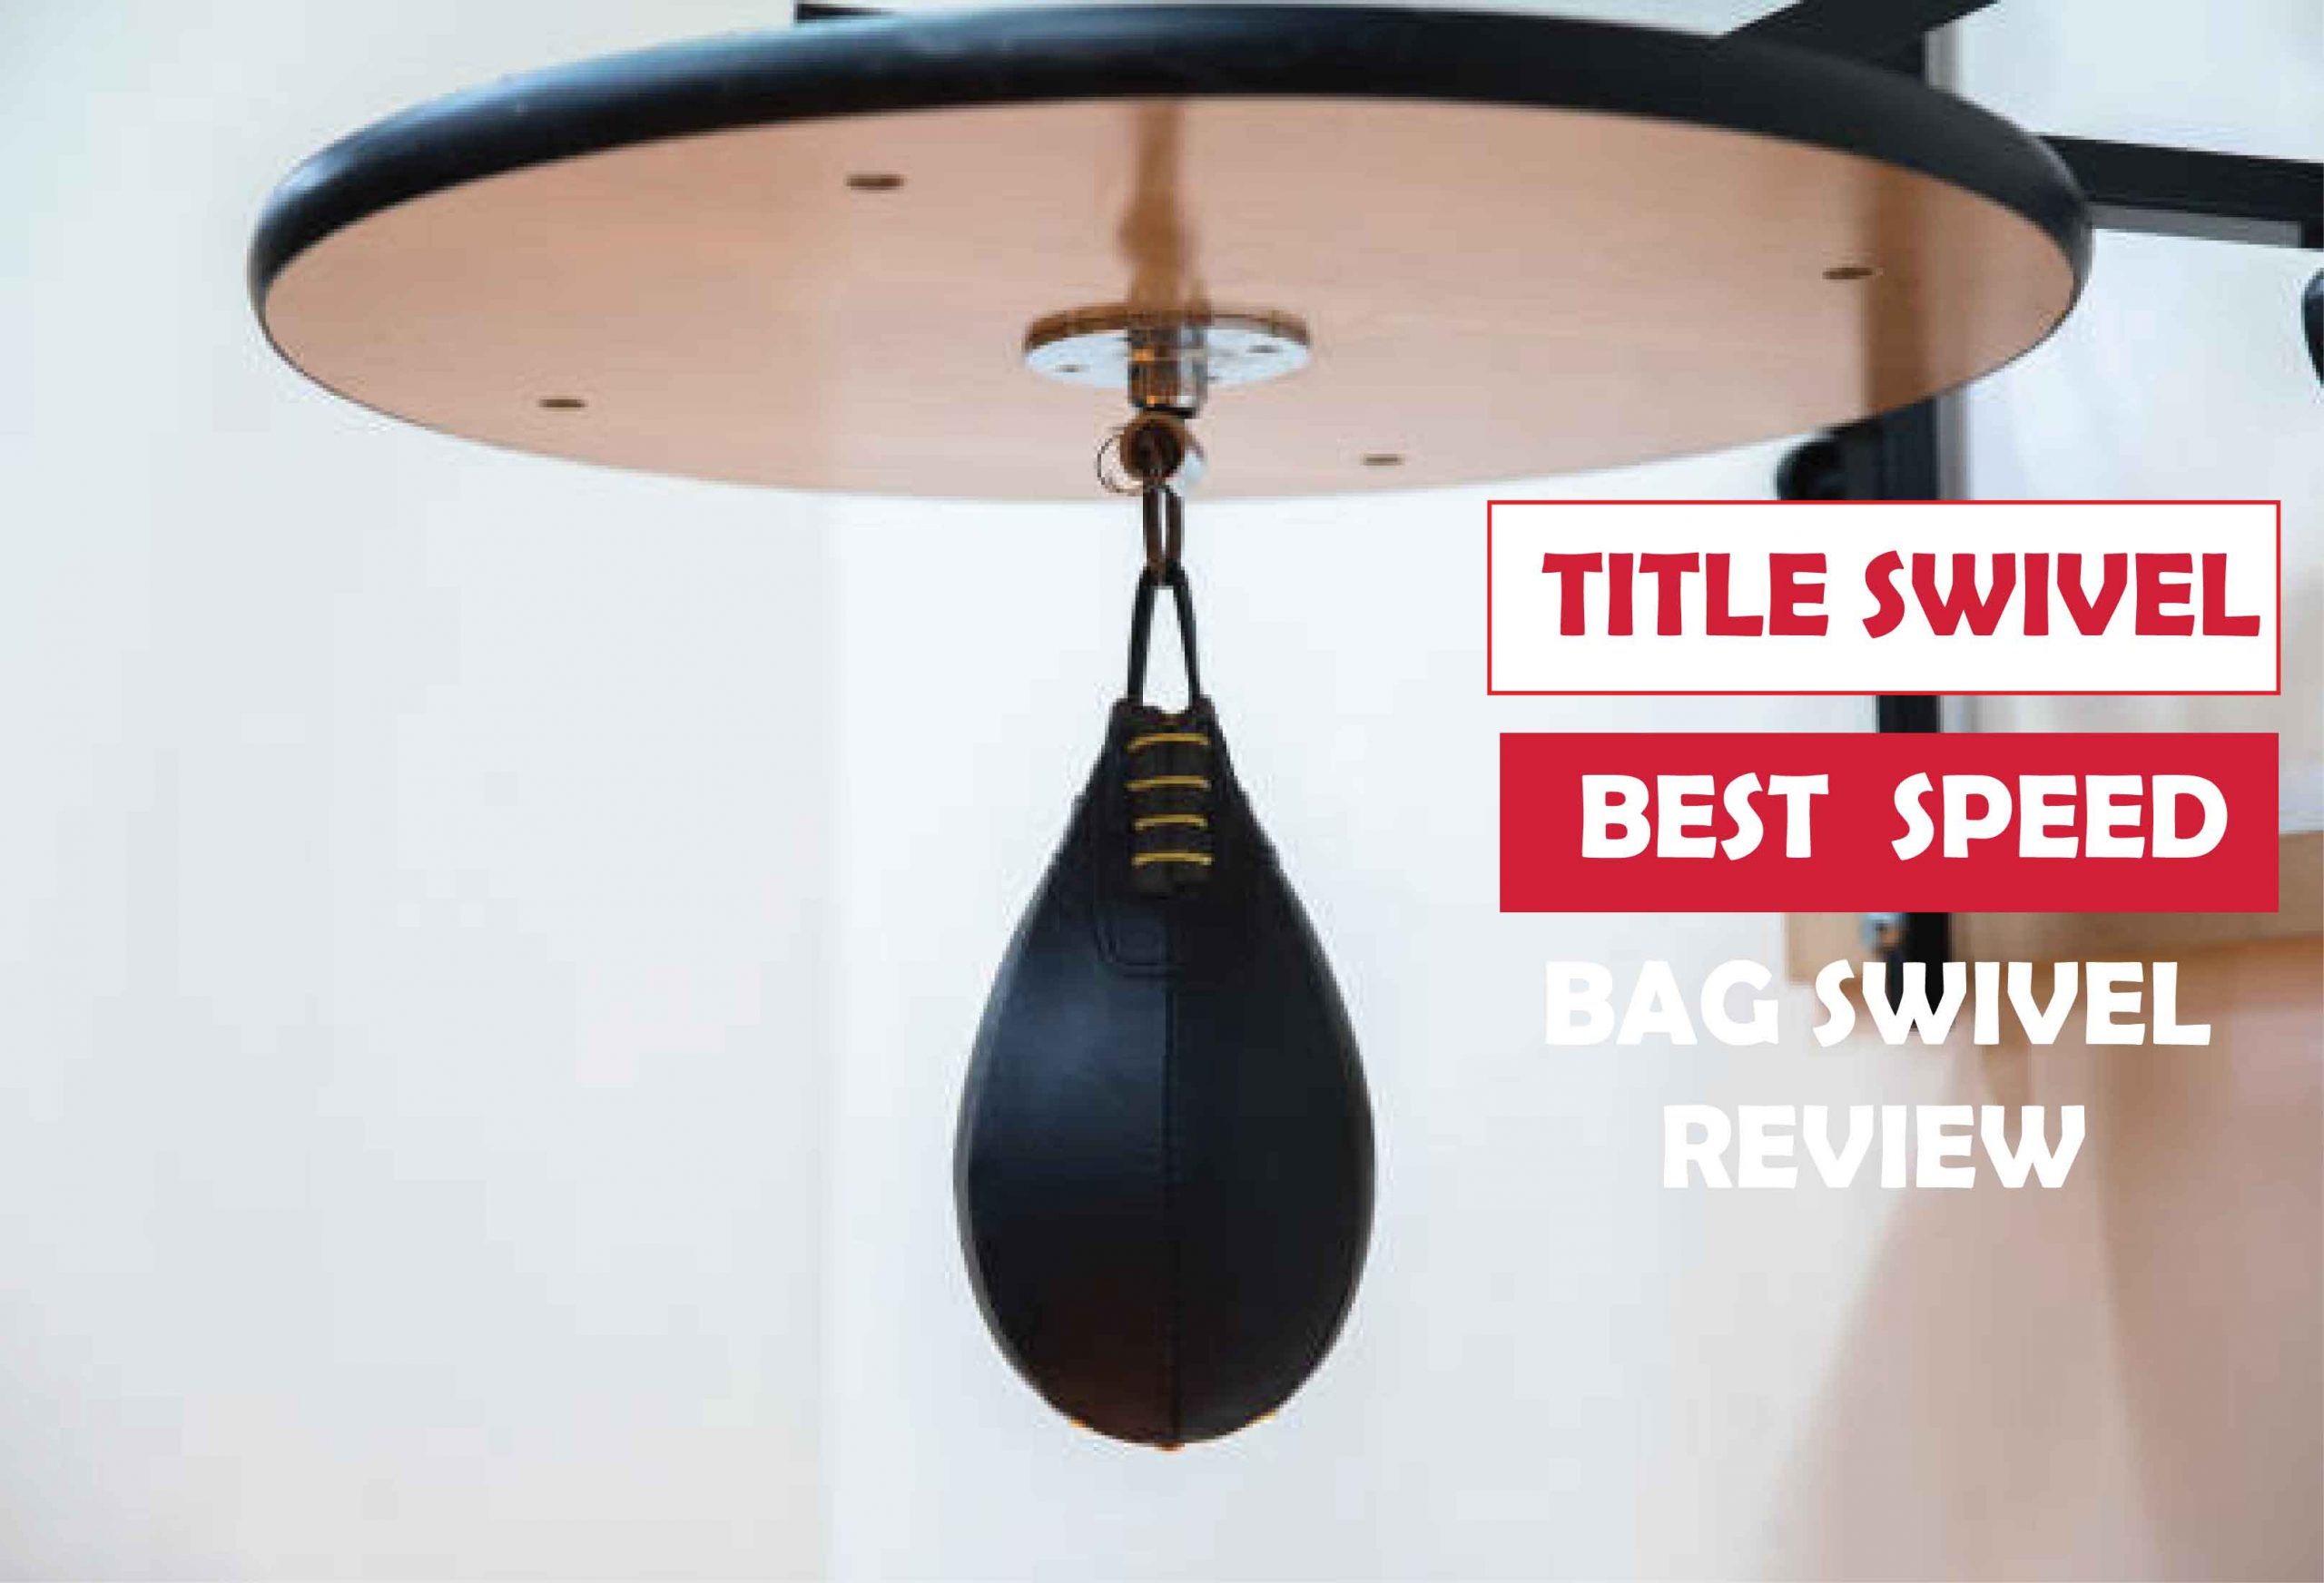 Title Swivel-The Best Speed Bag Swivel Review